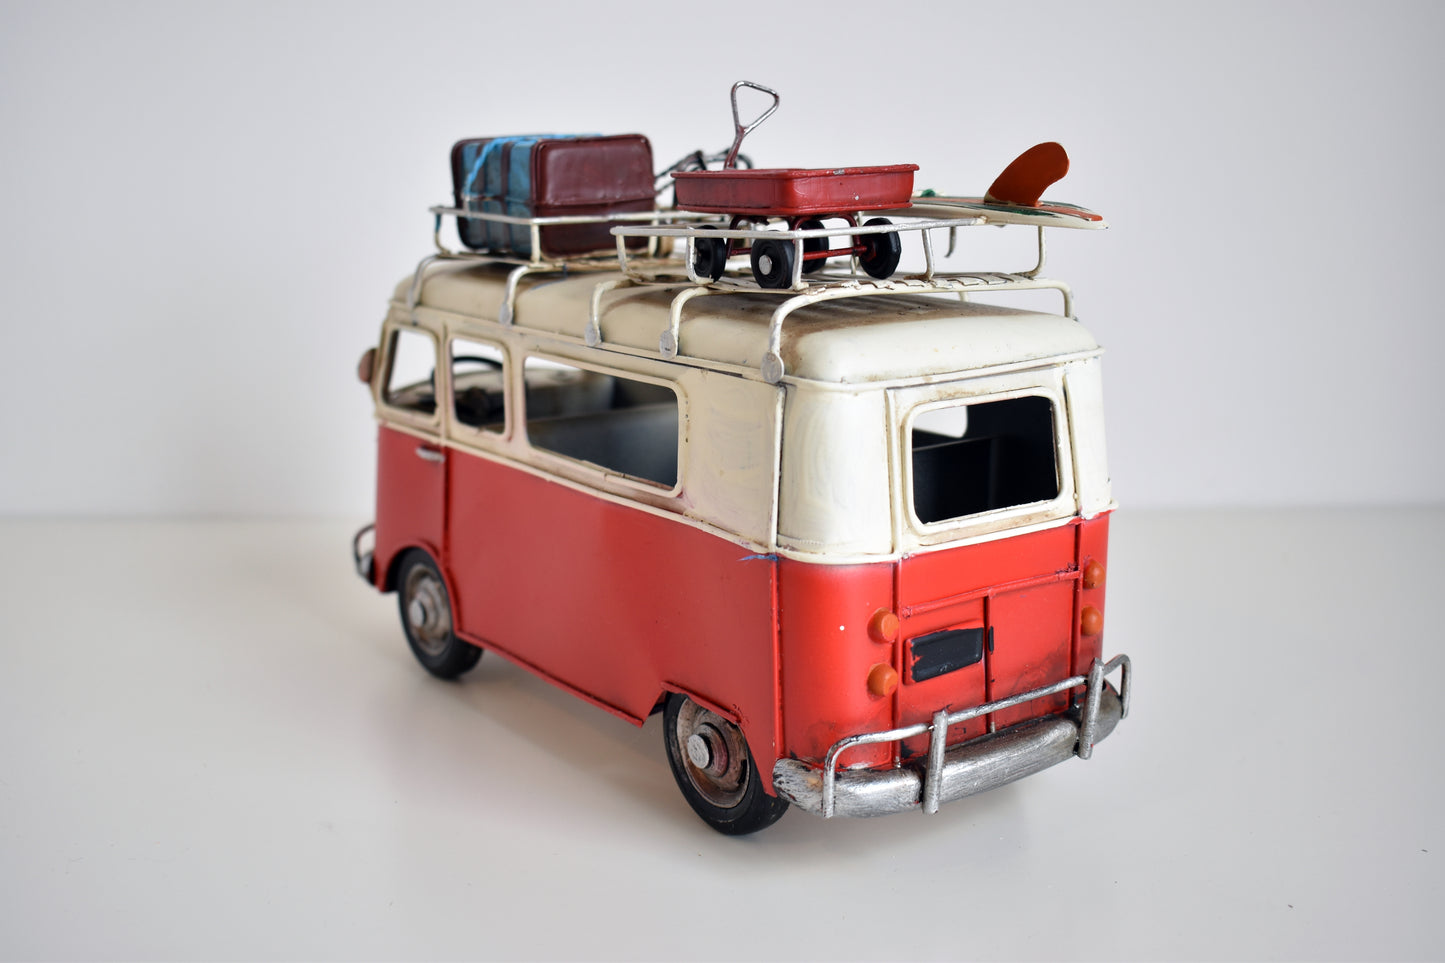 Split Screen Metal Retro Camper Van like VW model with Surf Board